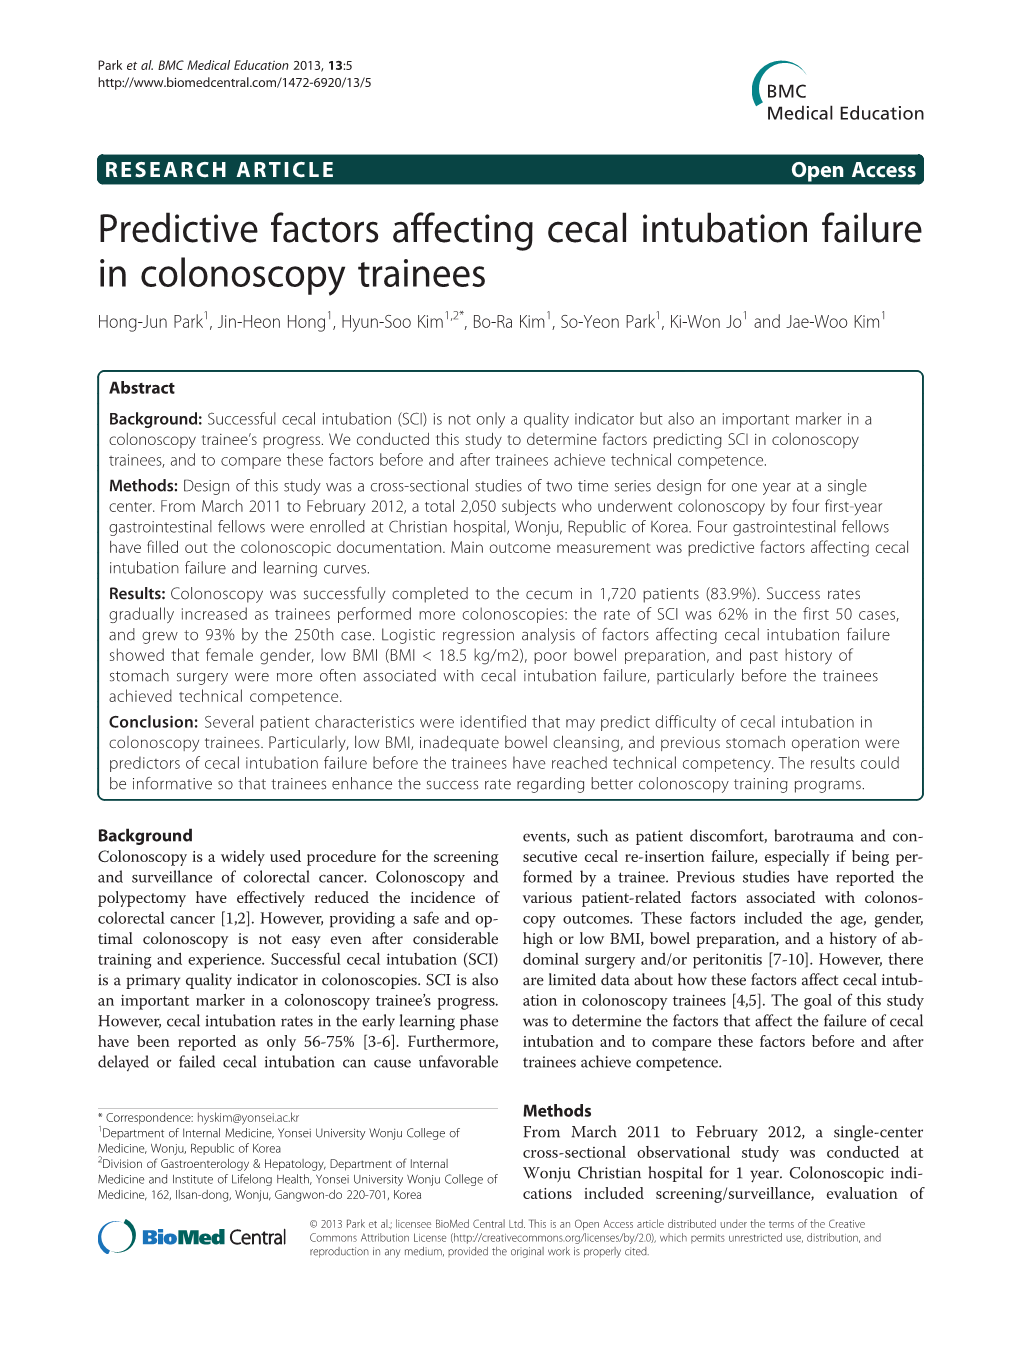 Predictive Factors Affecting Cecal Intubation Failure in Colonoscopy